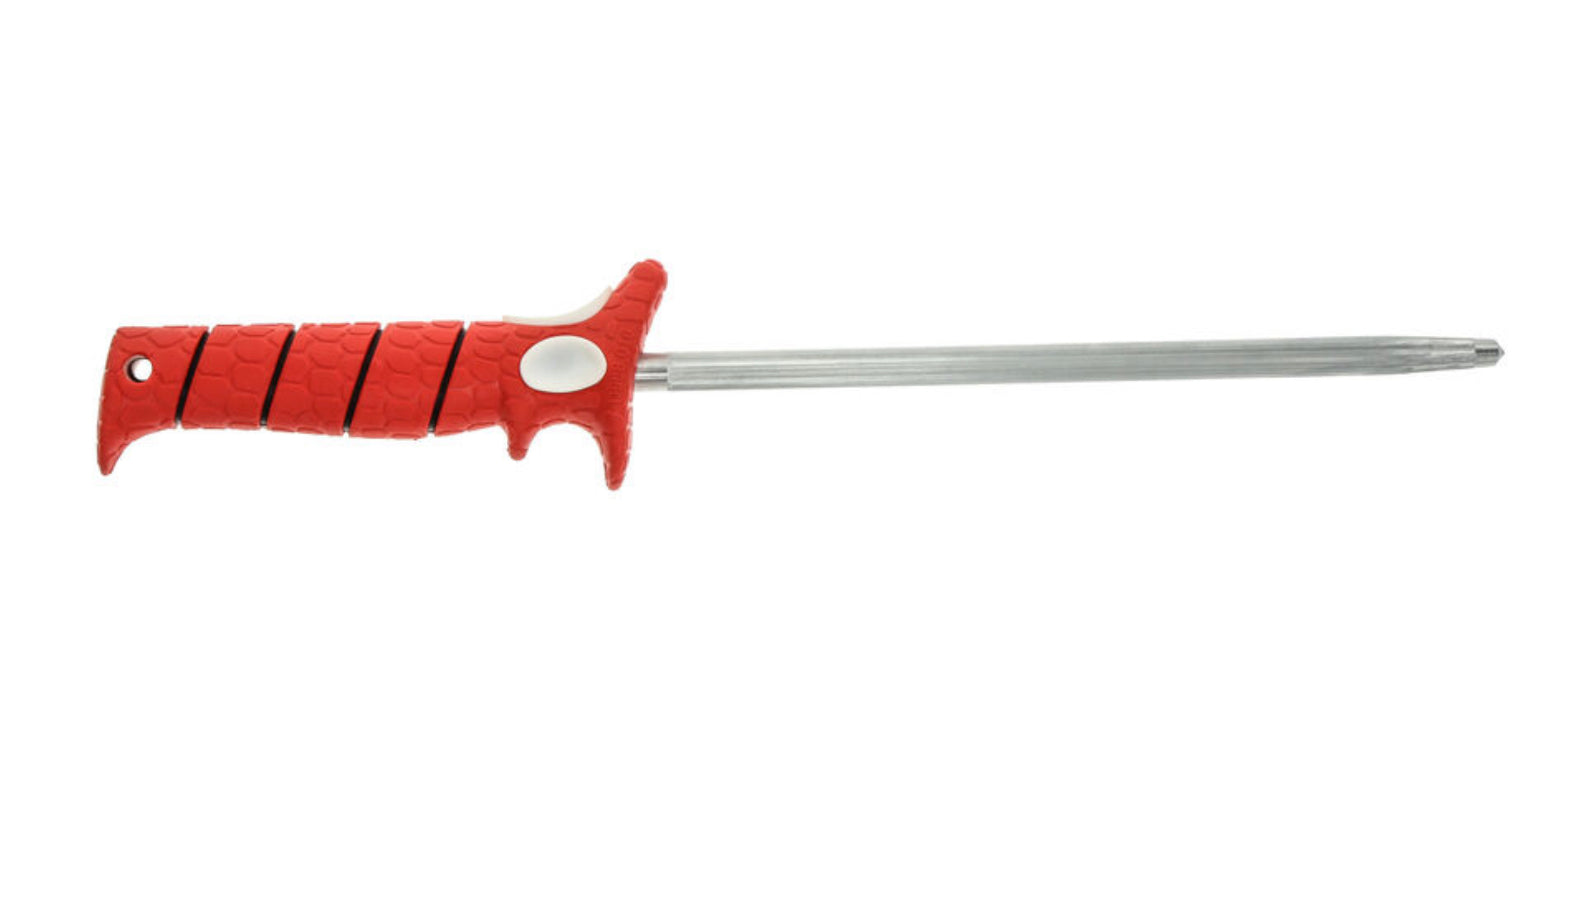 Bubba Blade Ultra Knife Sharpener for Sale $69.95